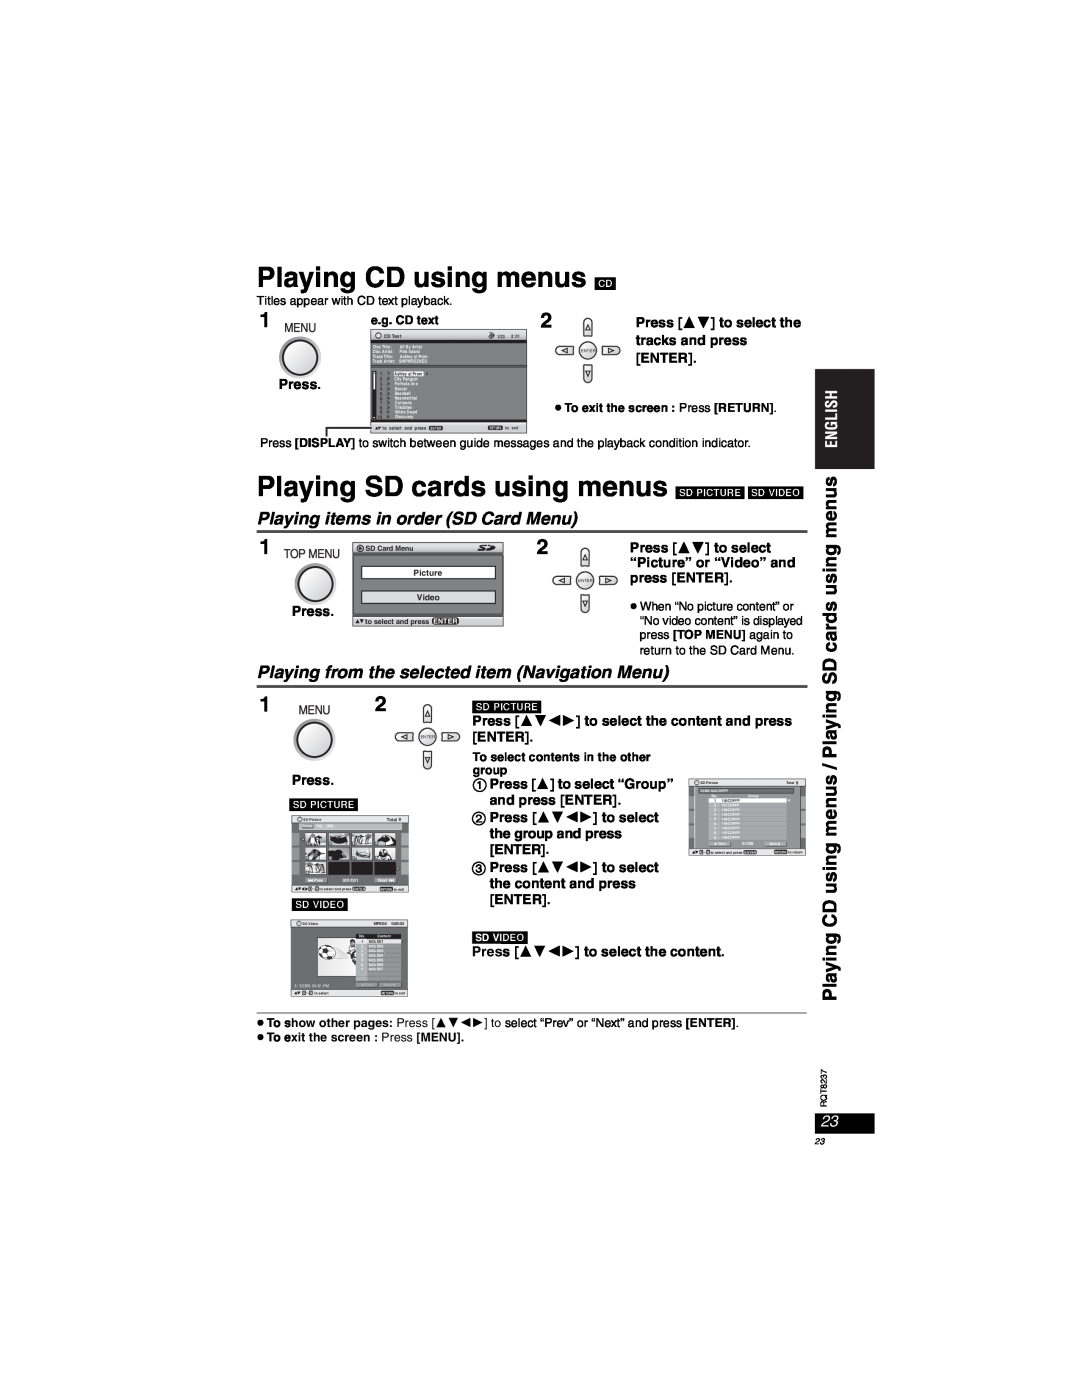 Panasonic DVD-LX97 Playing CD using menus CD, Playing SD cards using menus SDPICTURE SDVIDEO, Press, Enter 